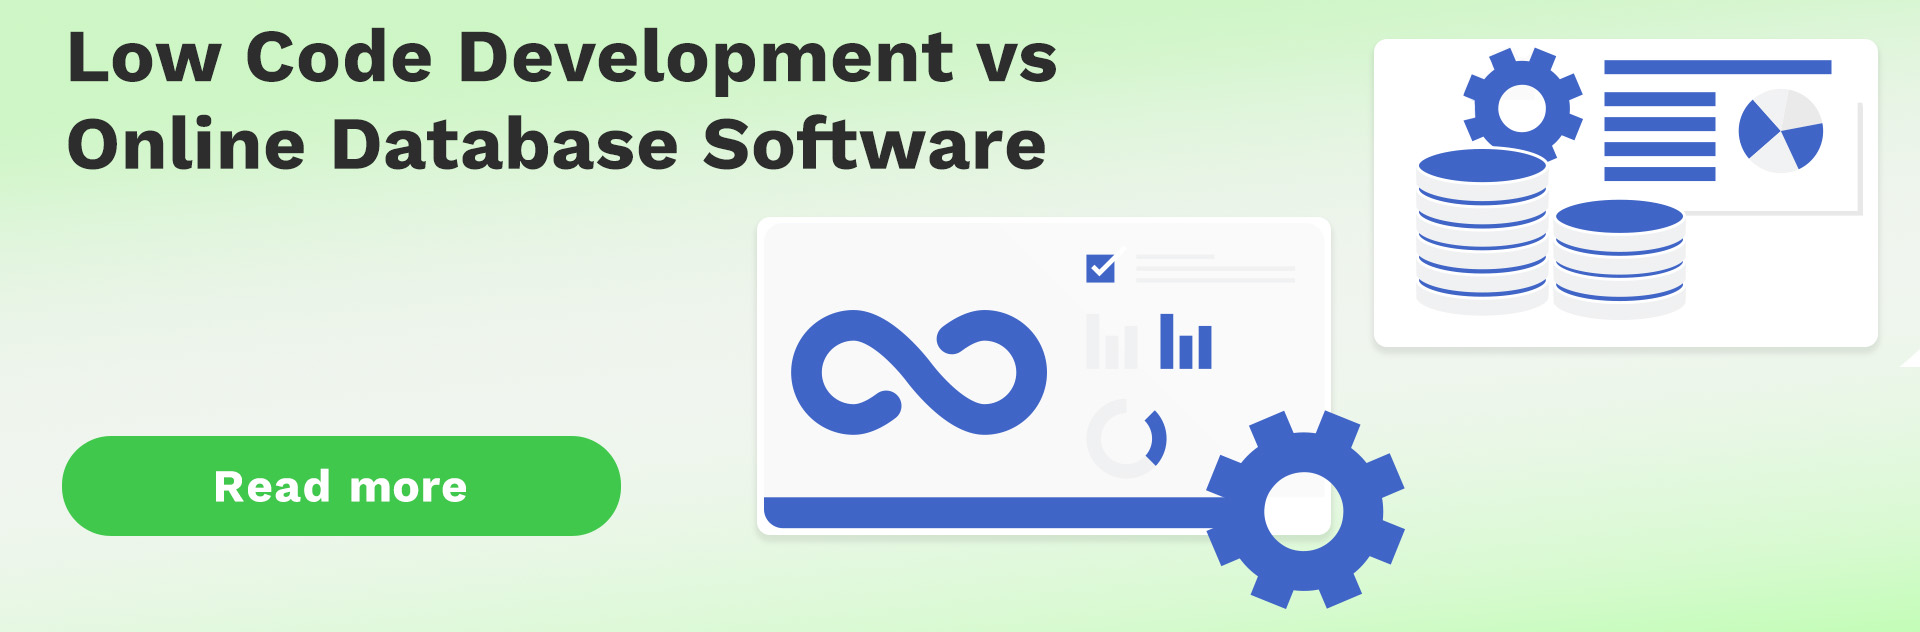 Low Code Development vs Online Database Software